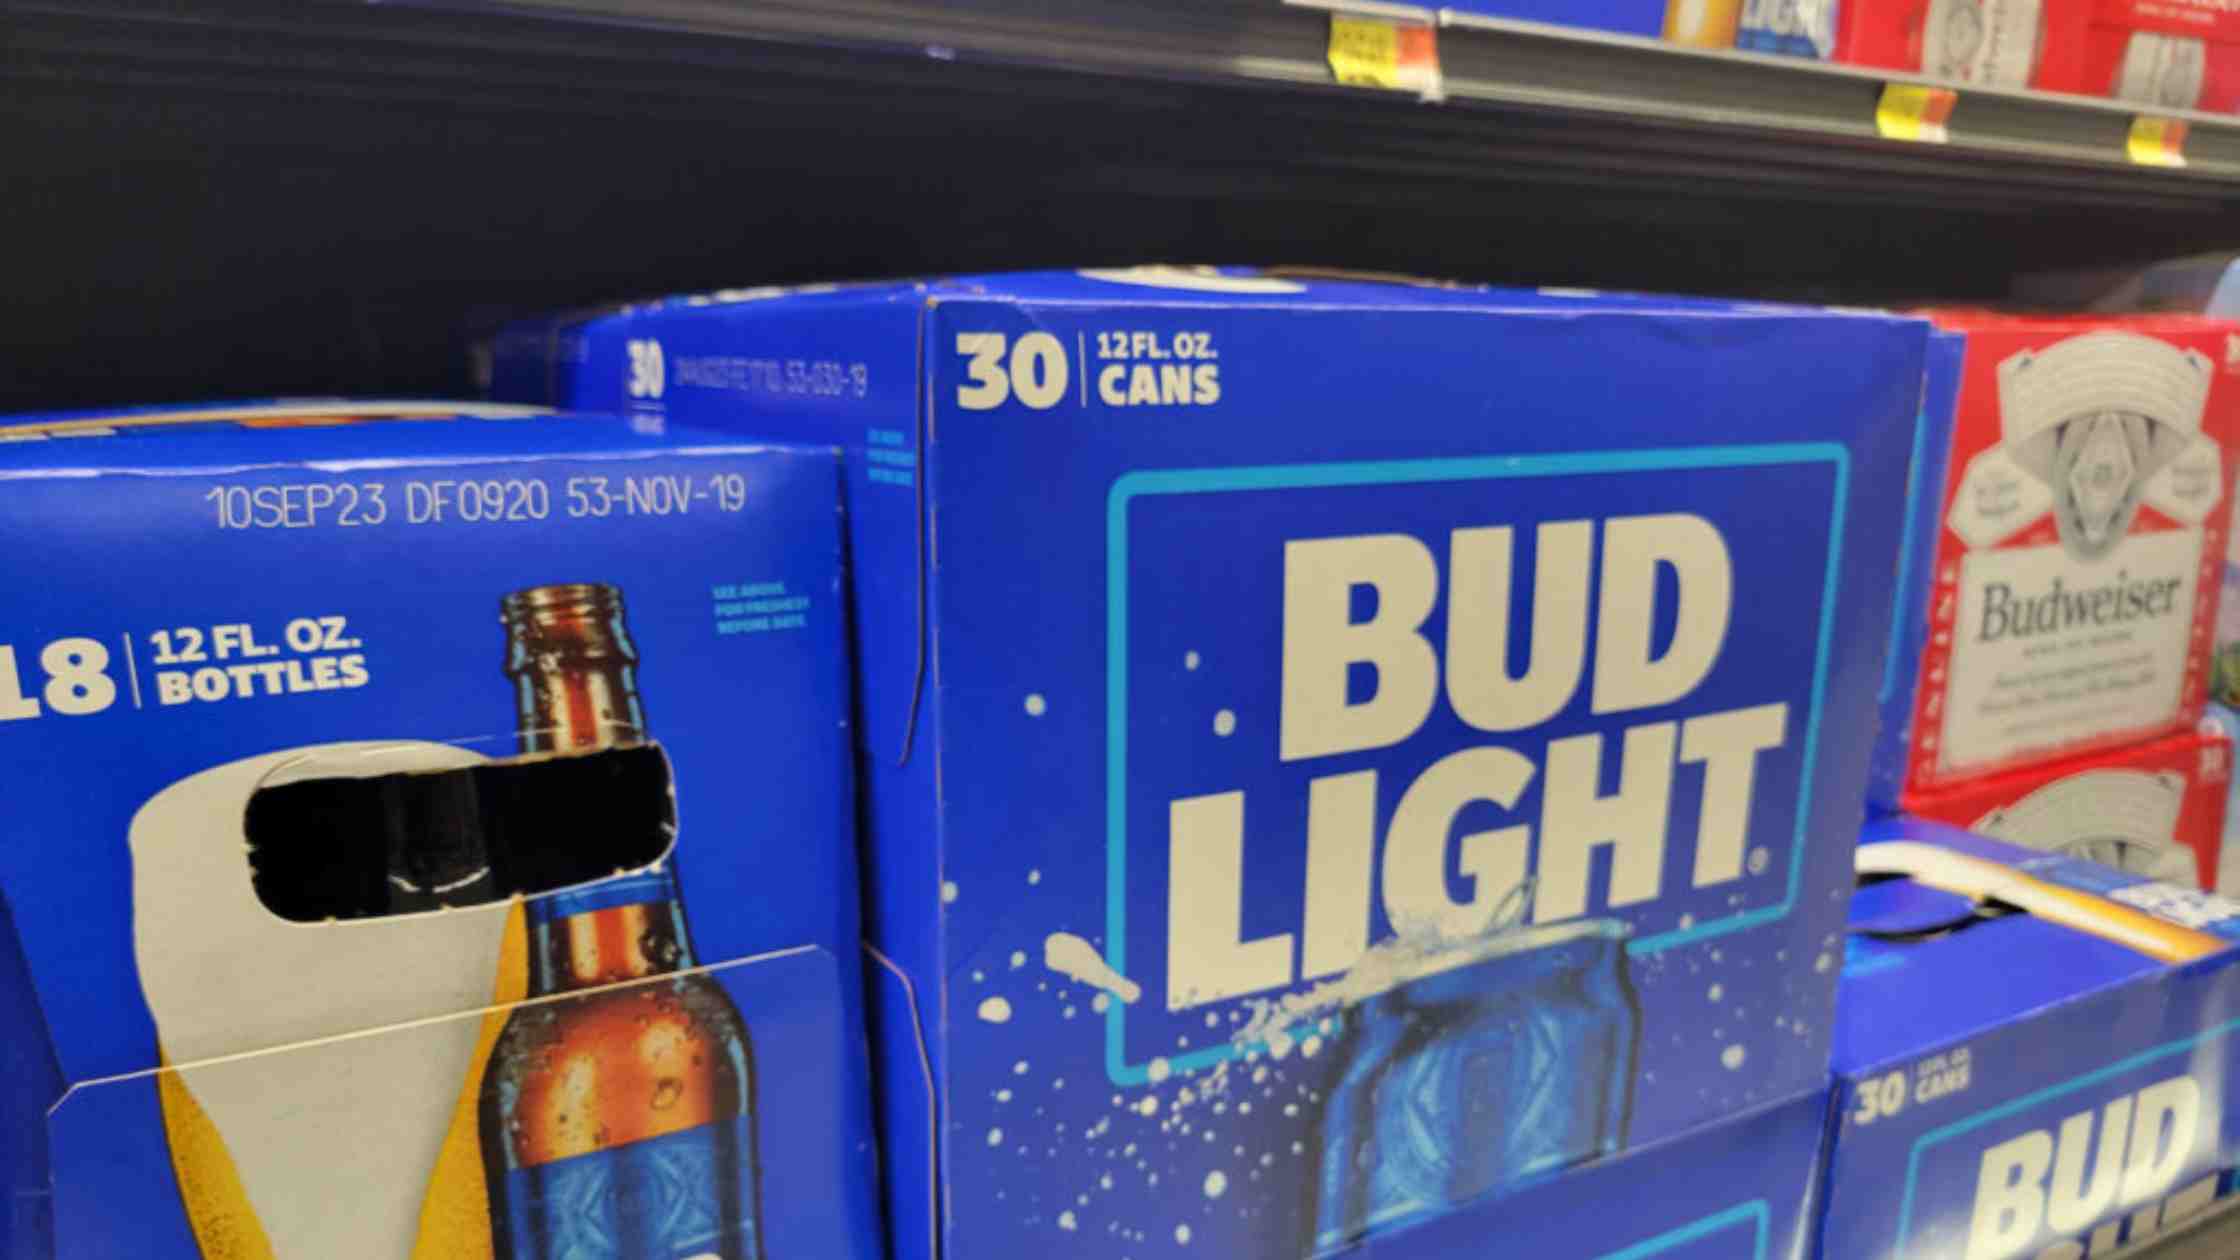 Bud Light discontinued